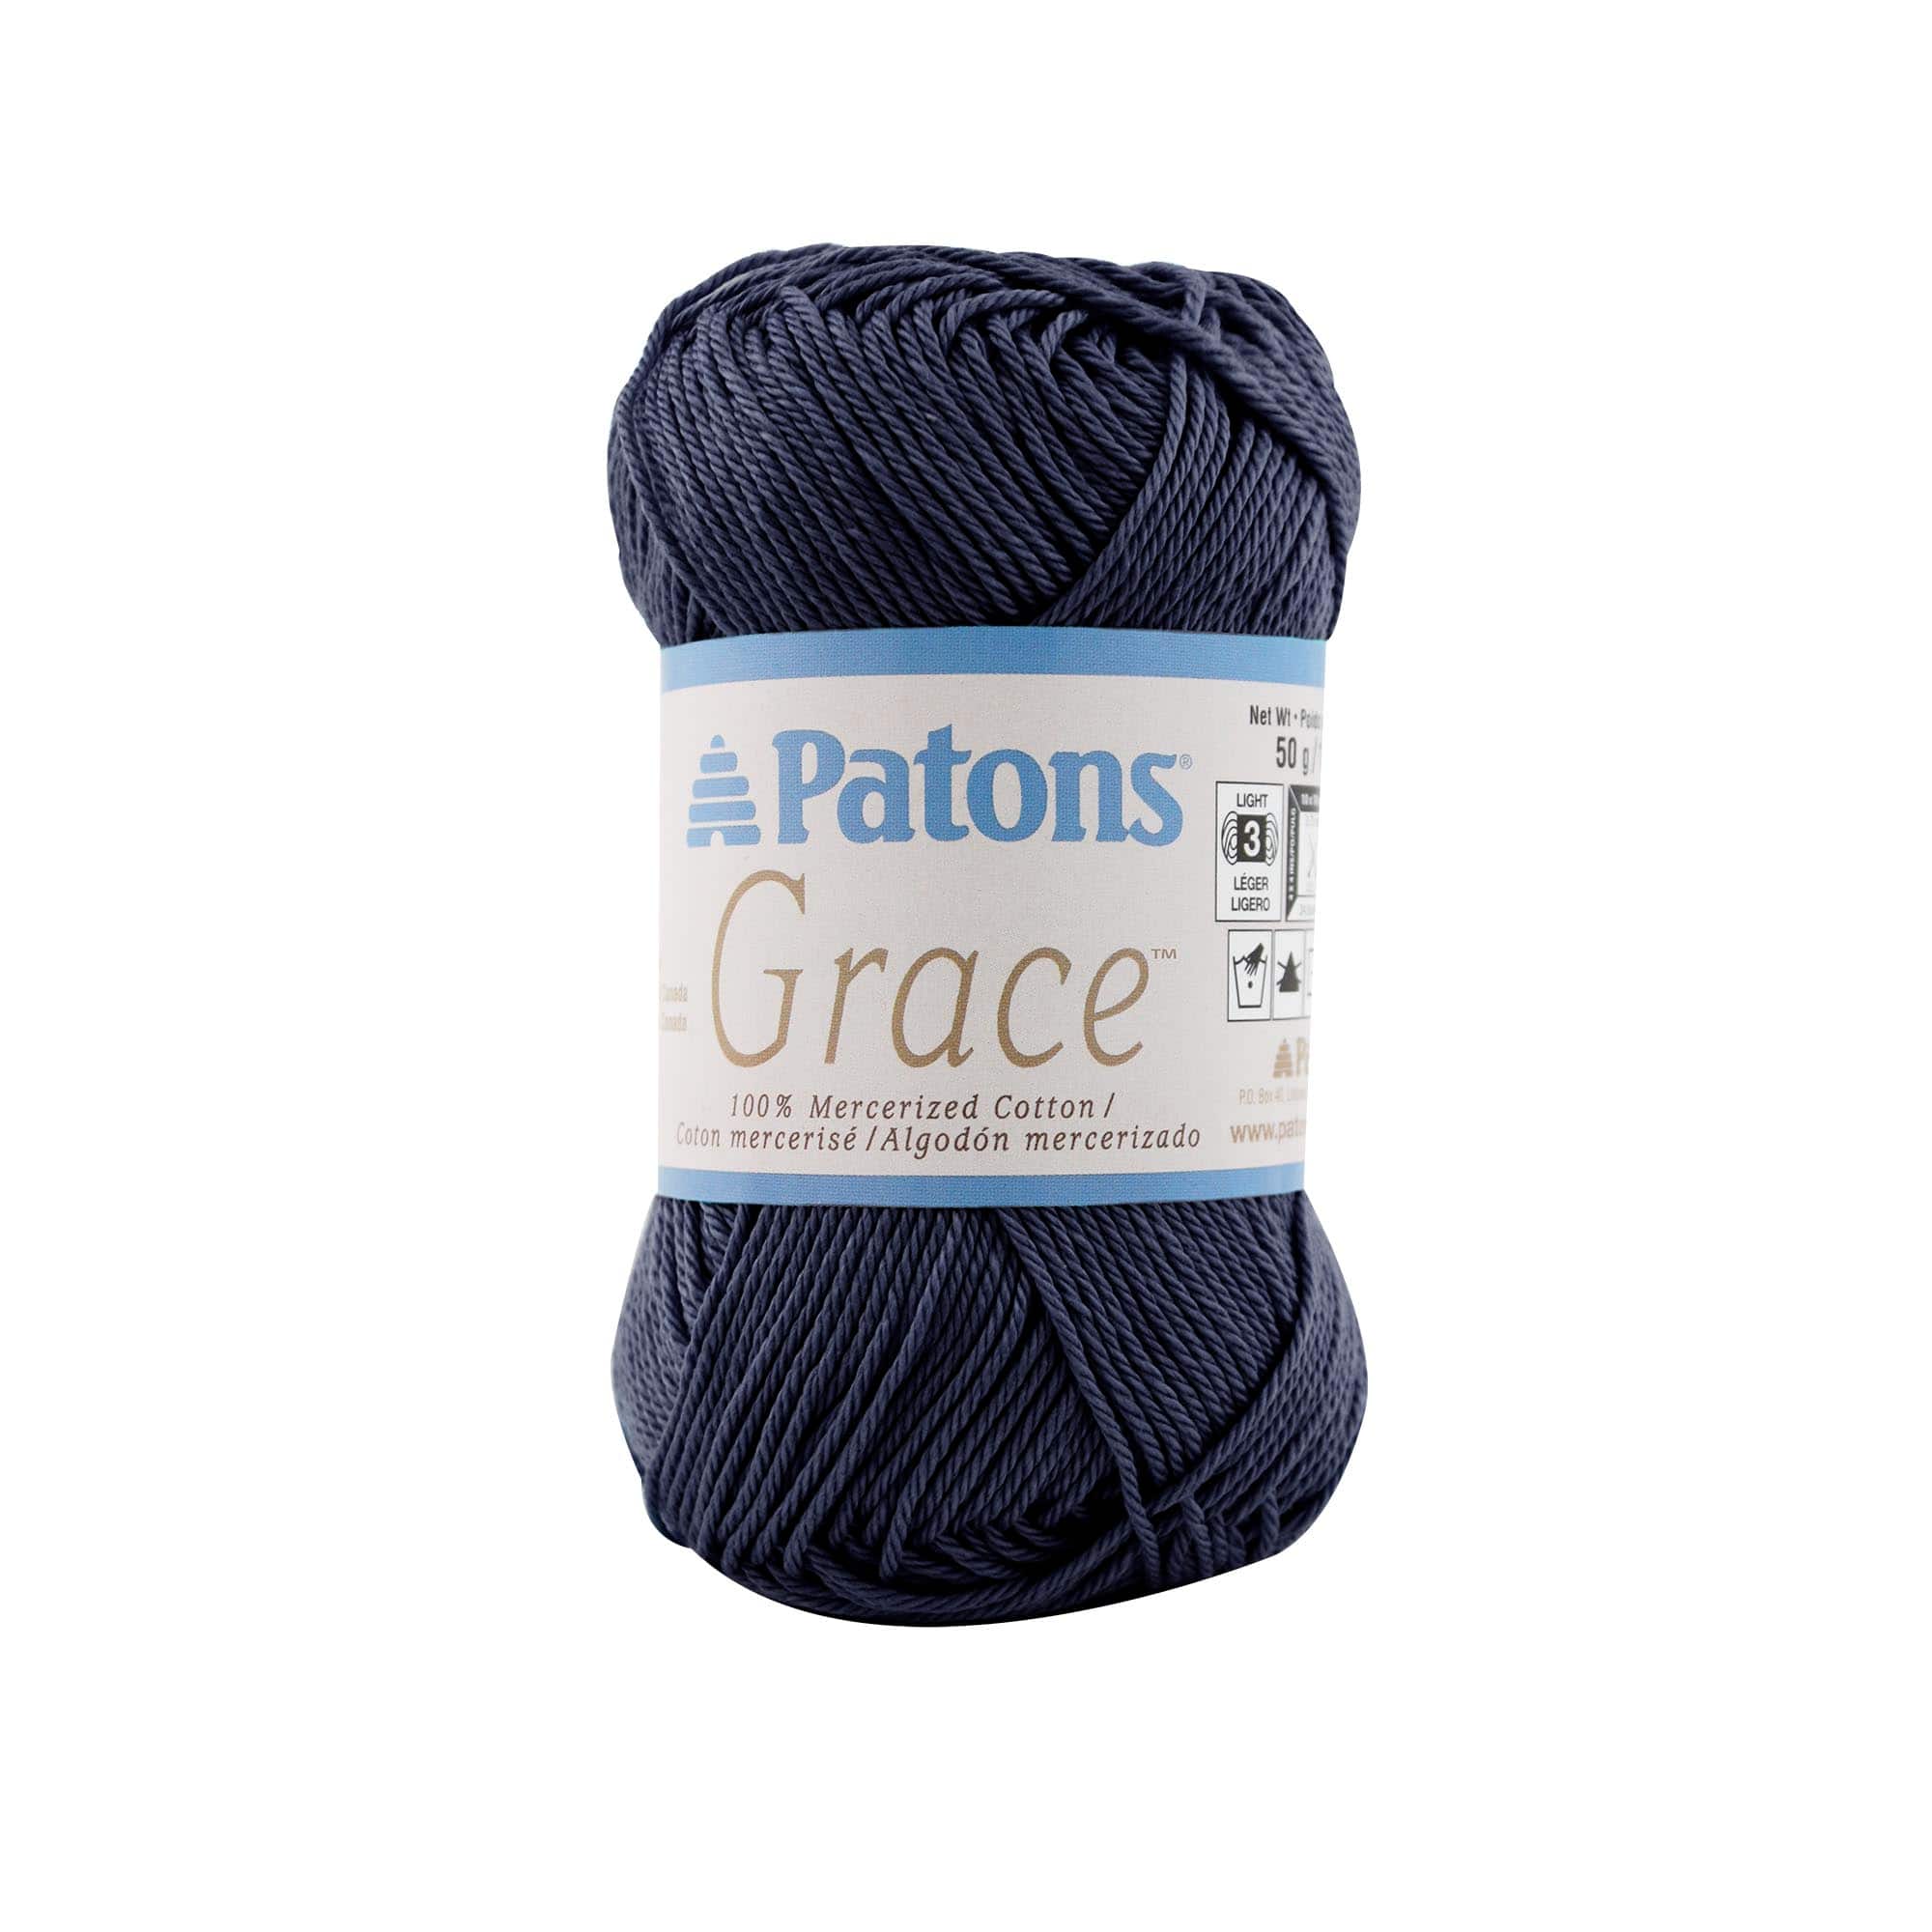 Patons GRACE 100% mercerized cotton yarn 1 sk choice/color 